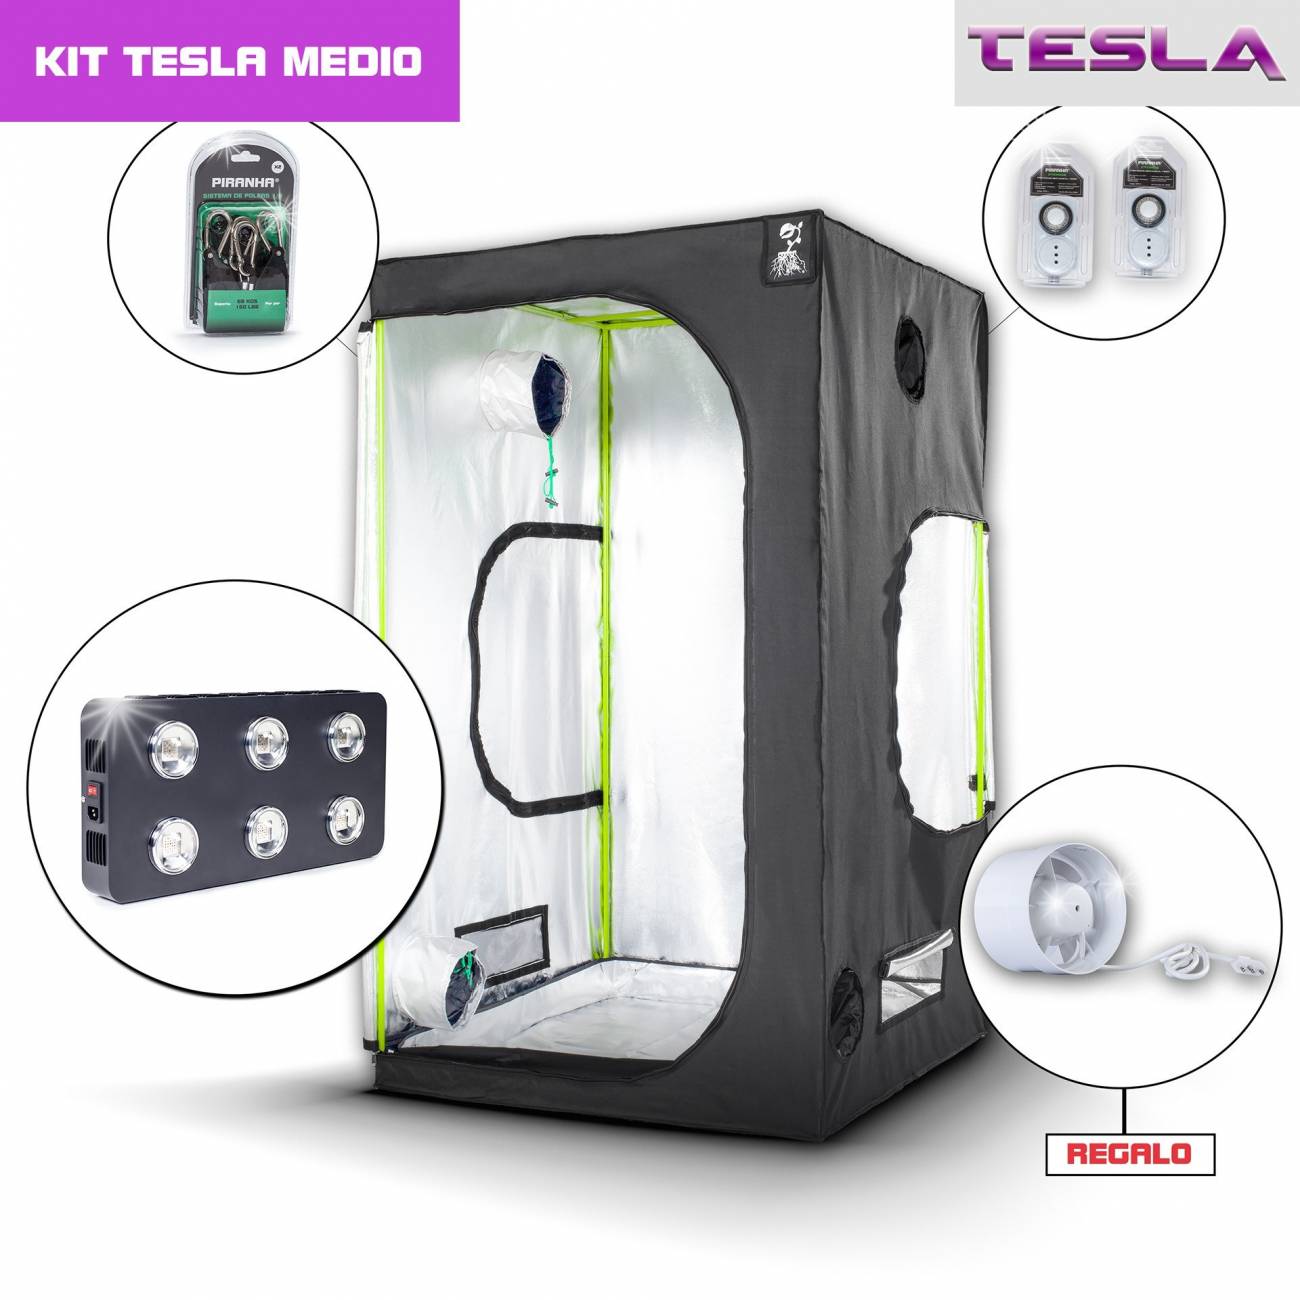 Kit Tesla 120 - T540W Medio